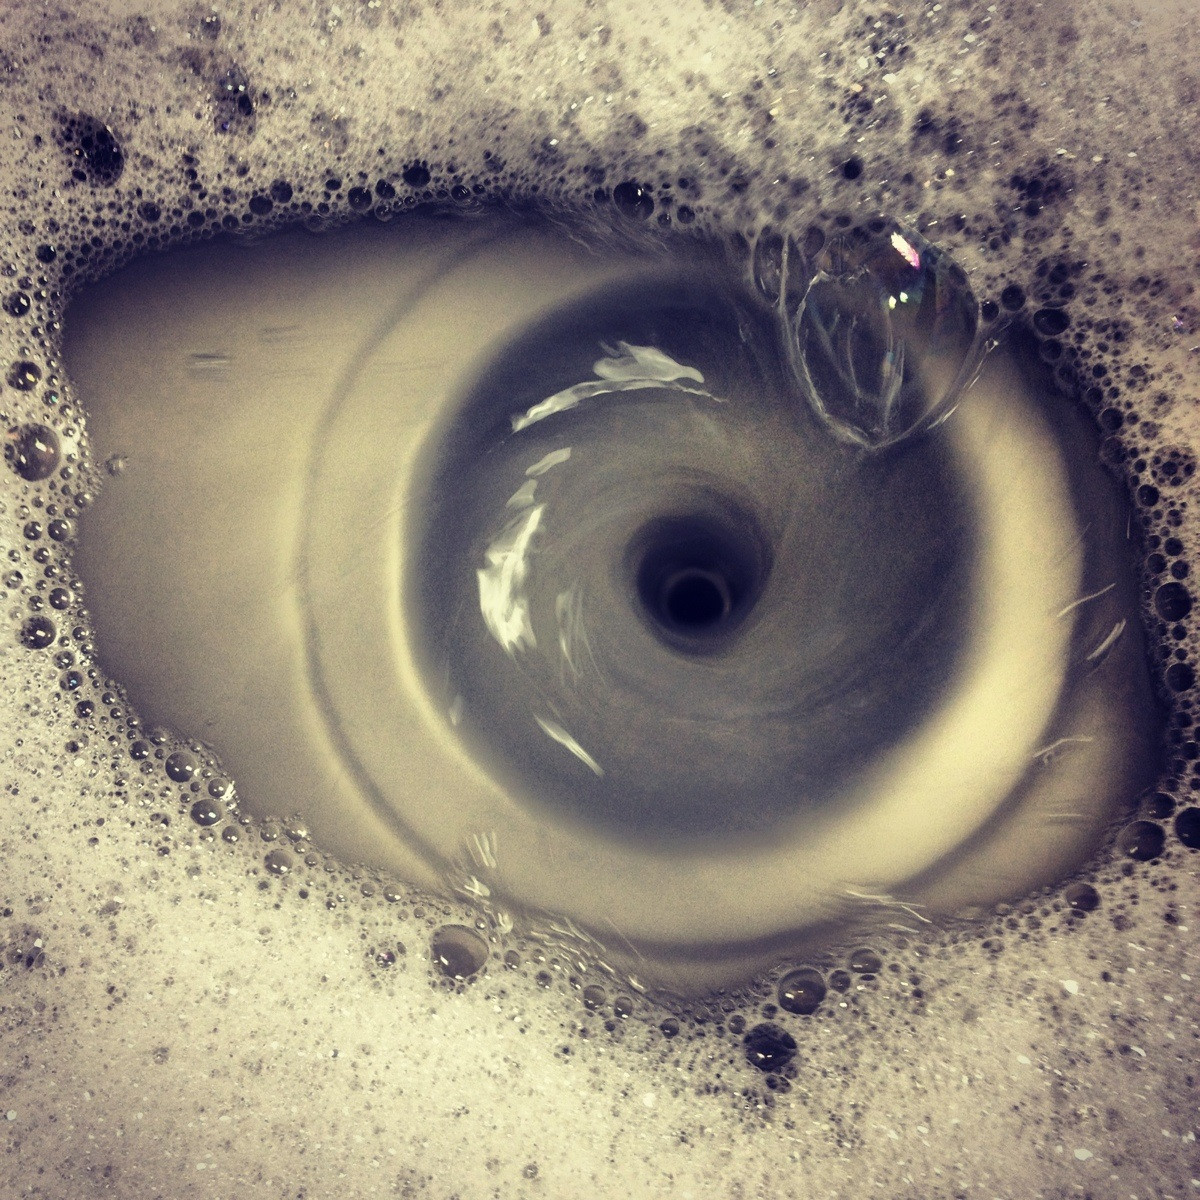 A drain that looks like an eye